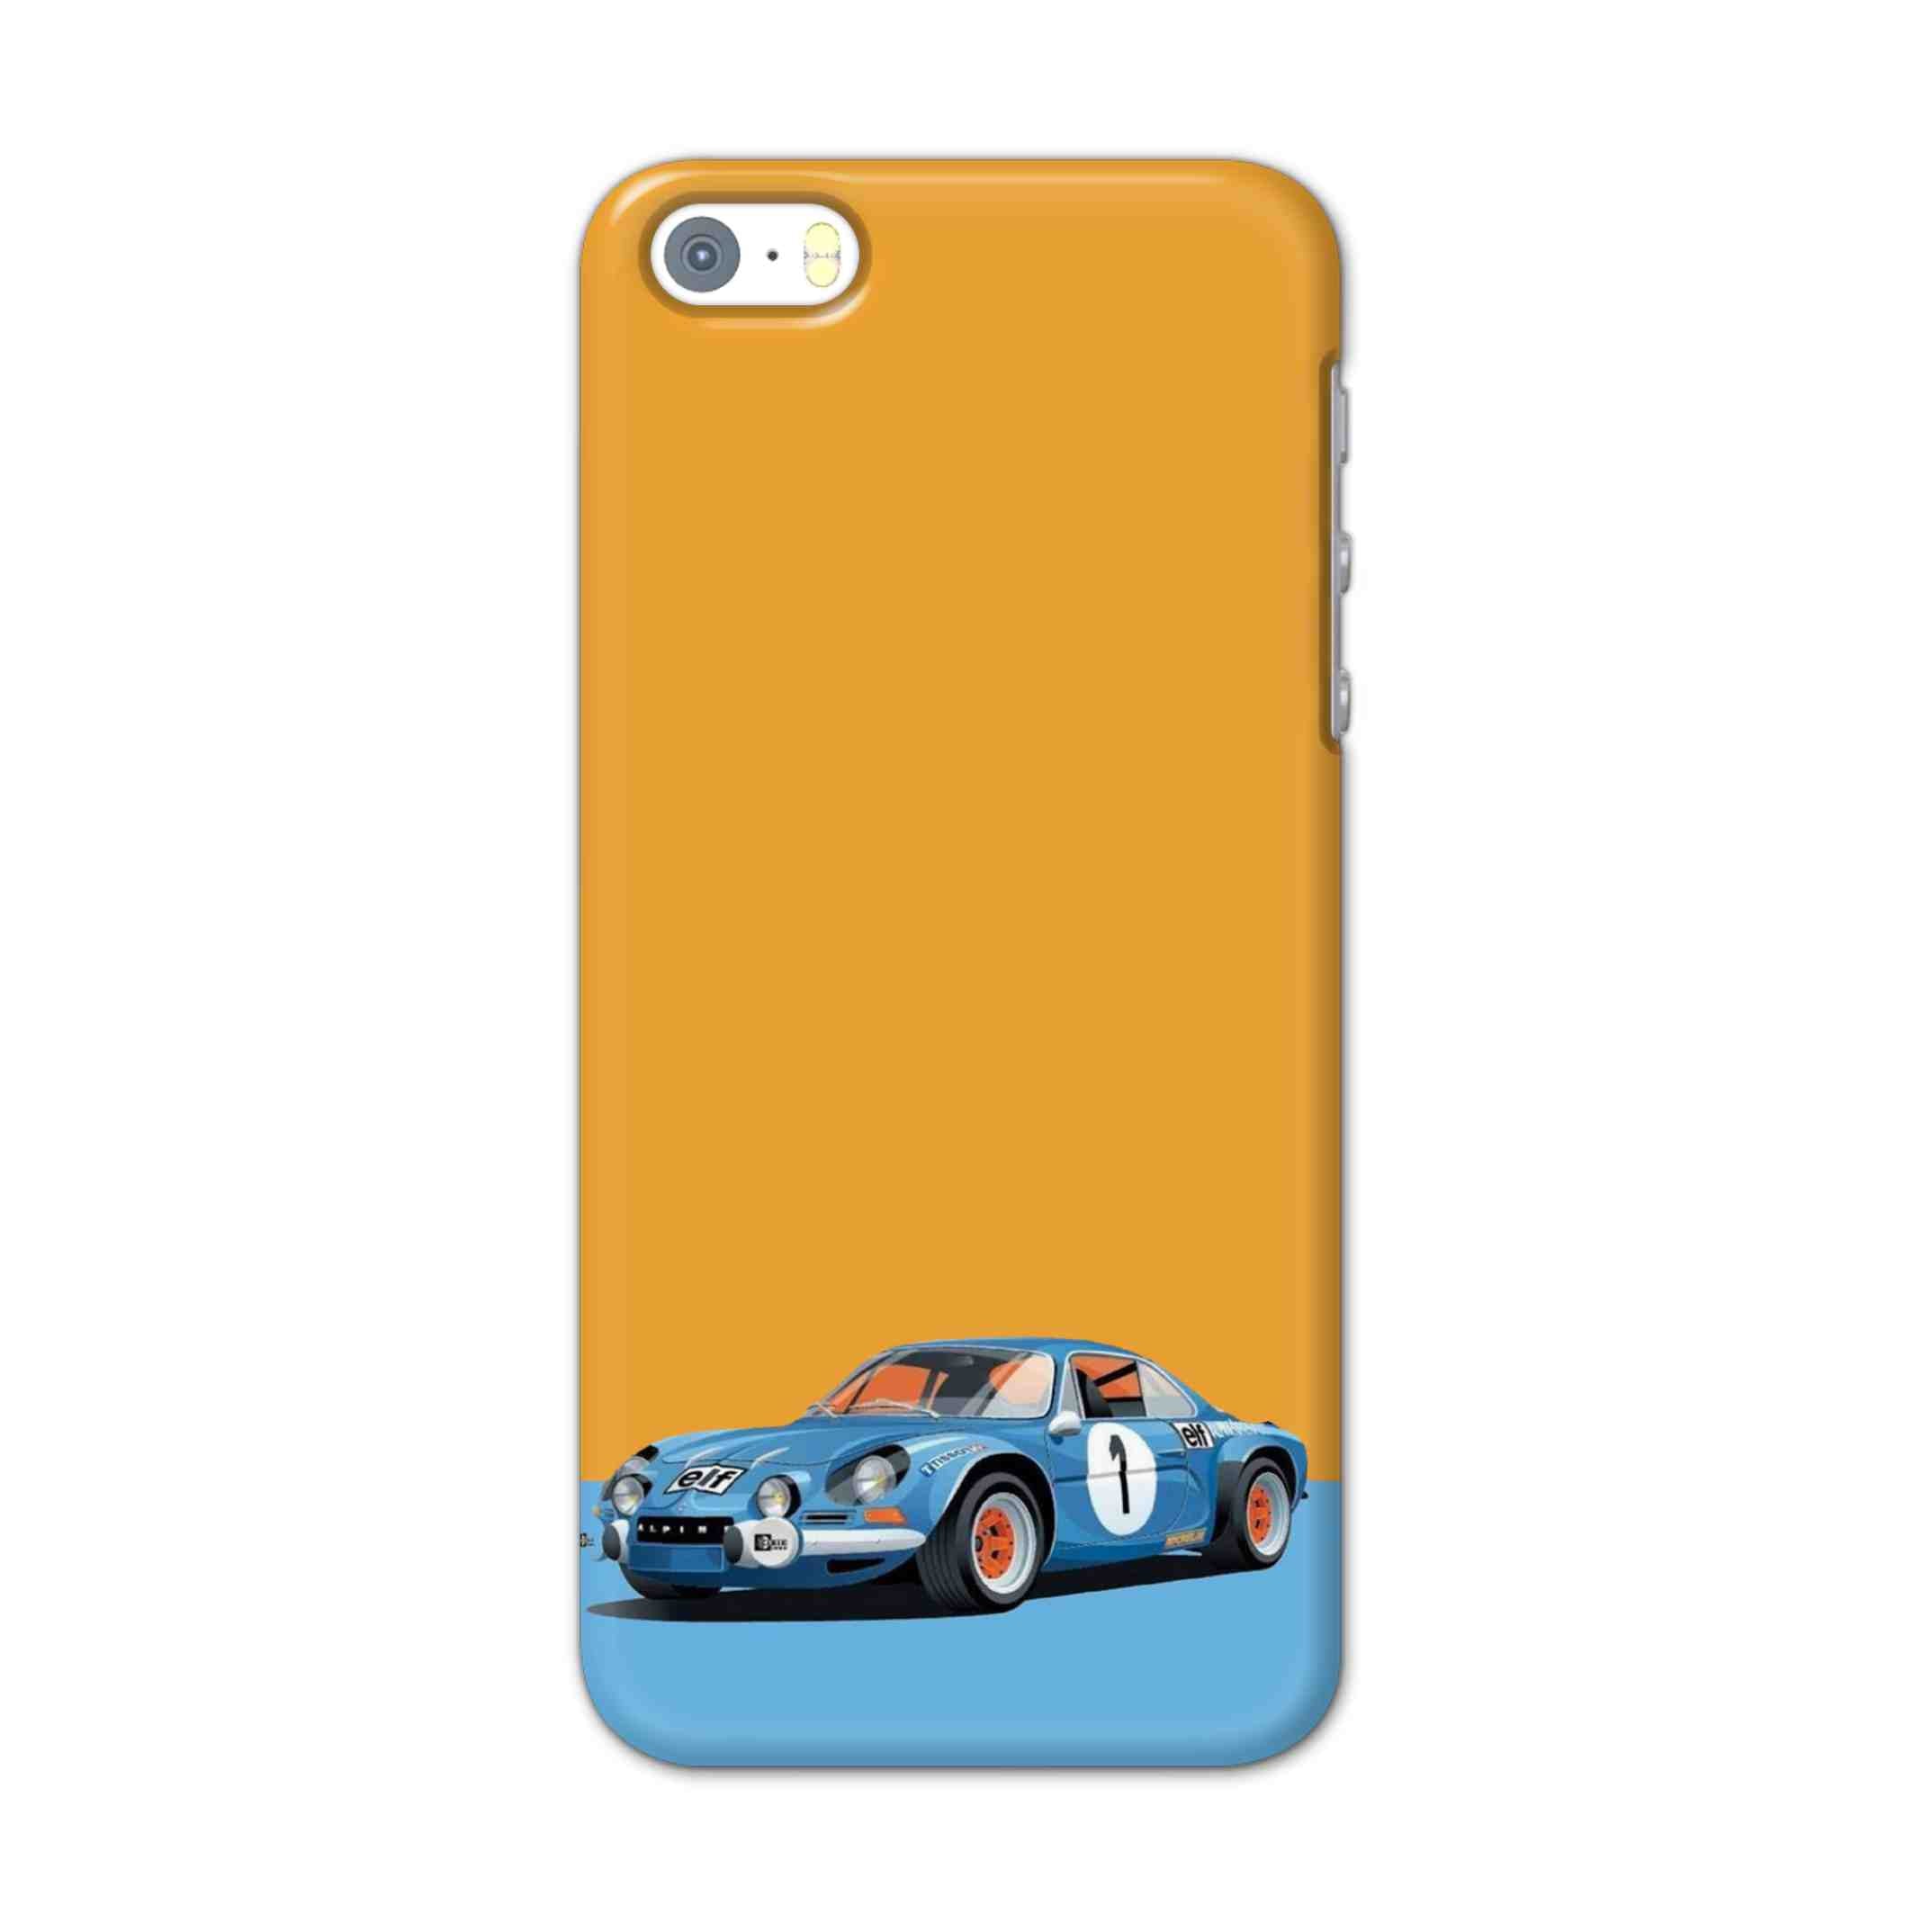 Buy Ferrari F1 Hard Back Mobile Phone Case/Cover For Apple Iphone SE Online